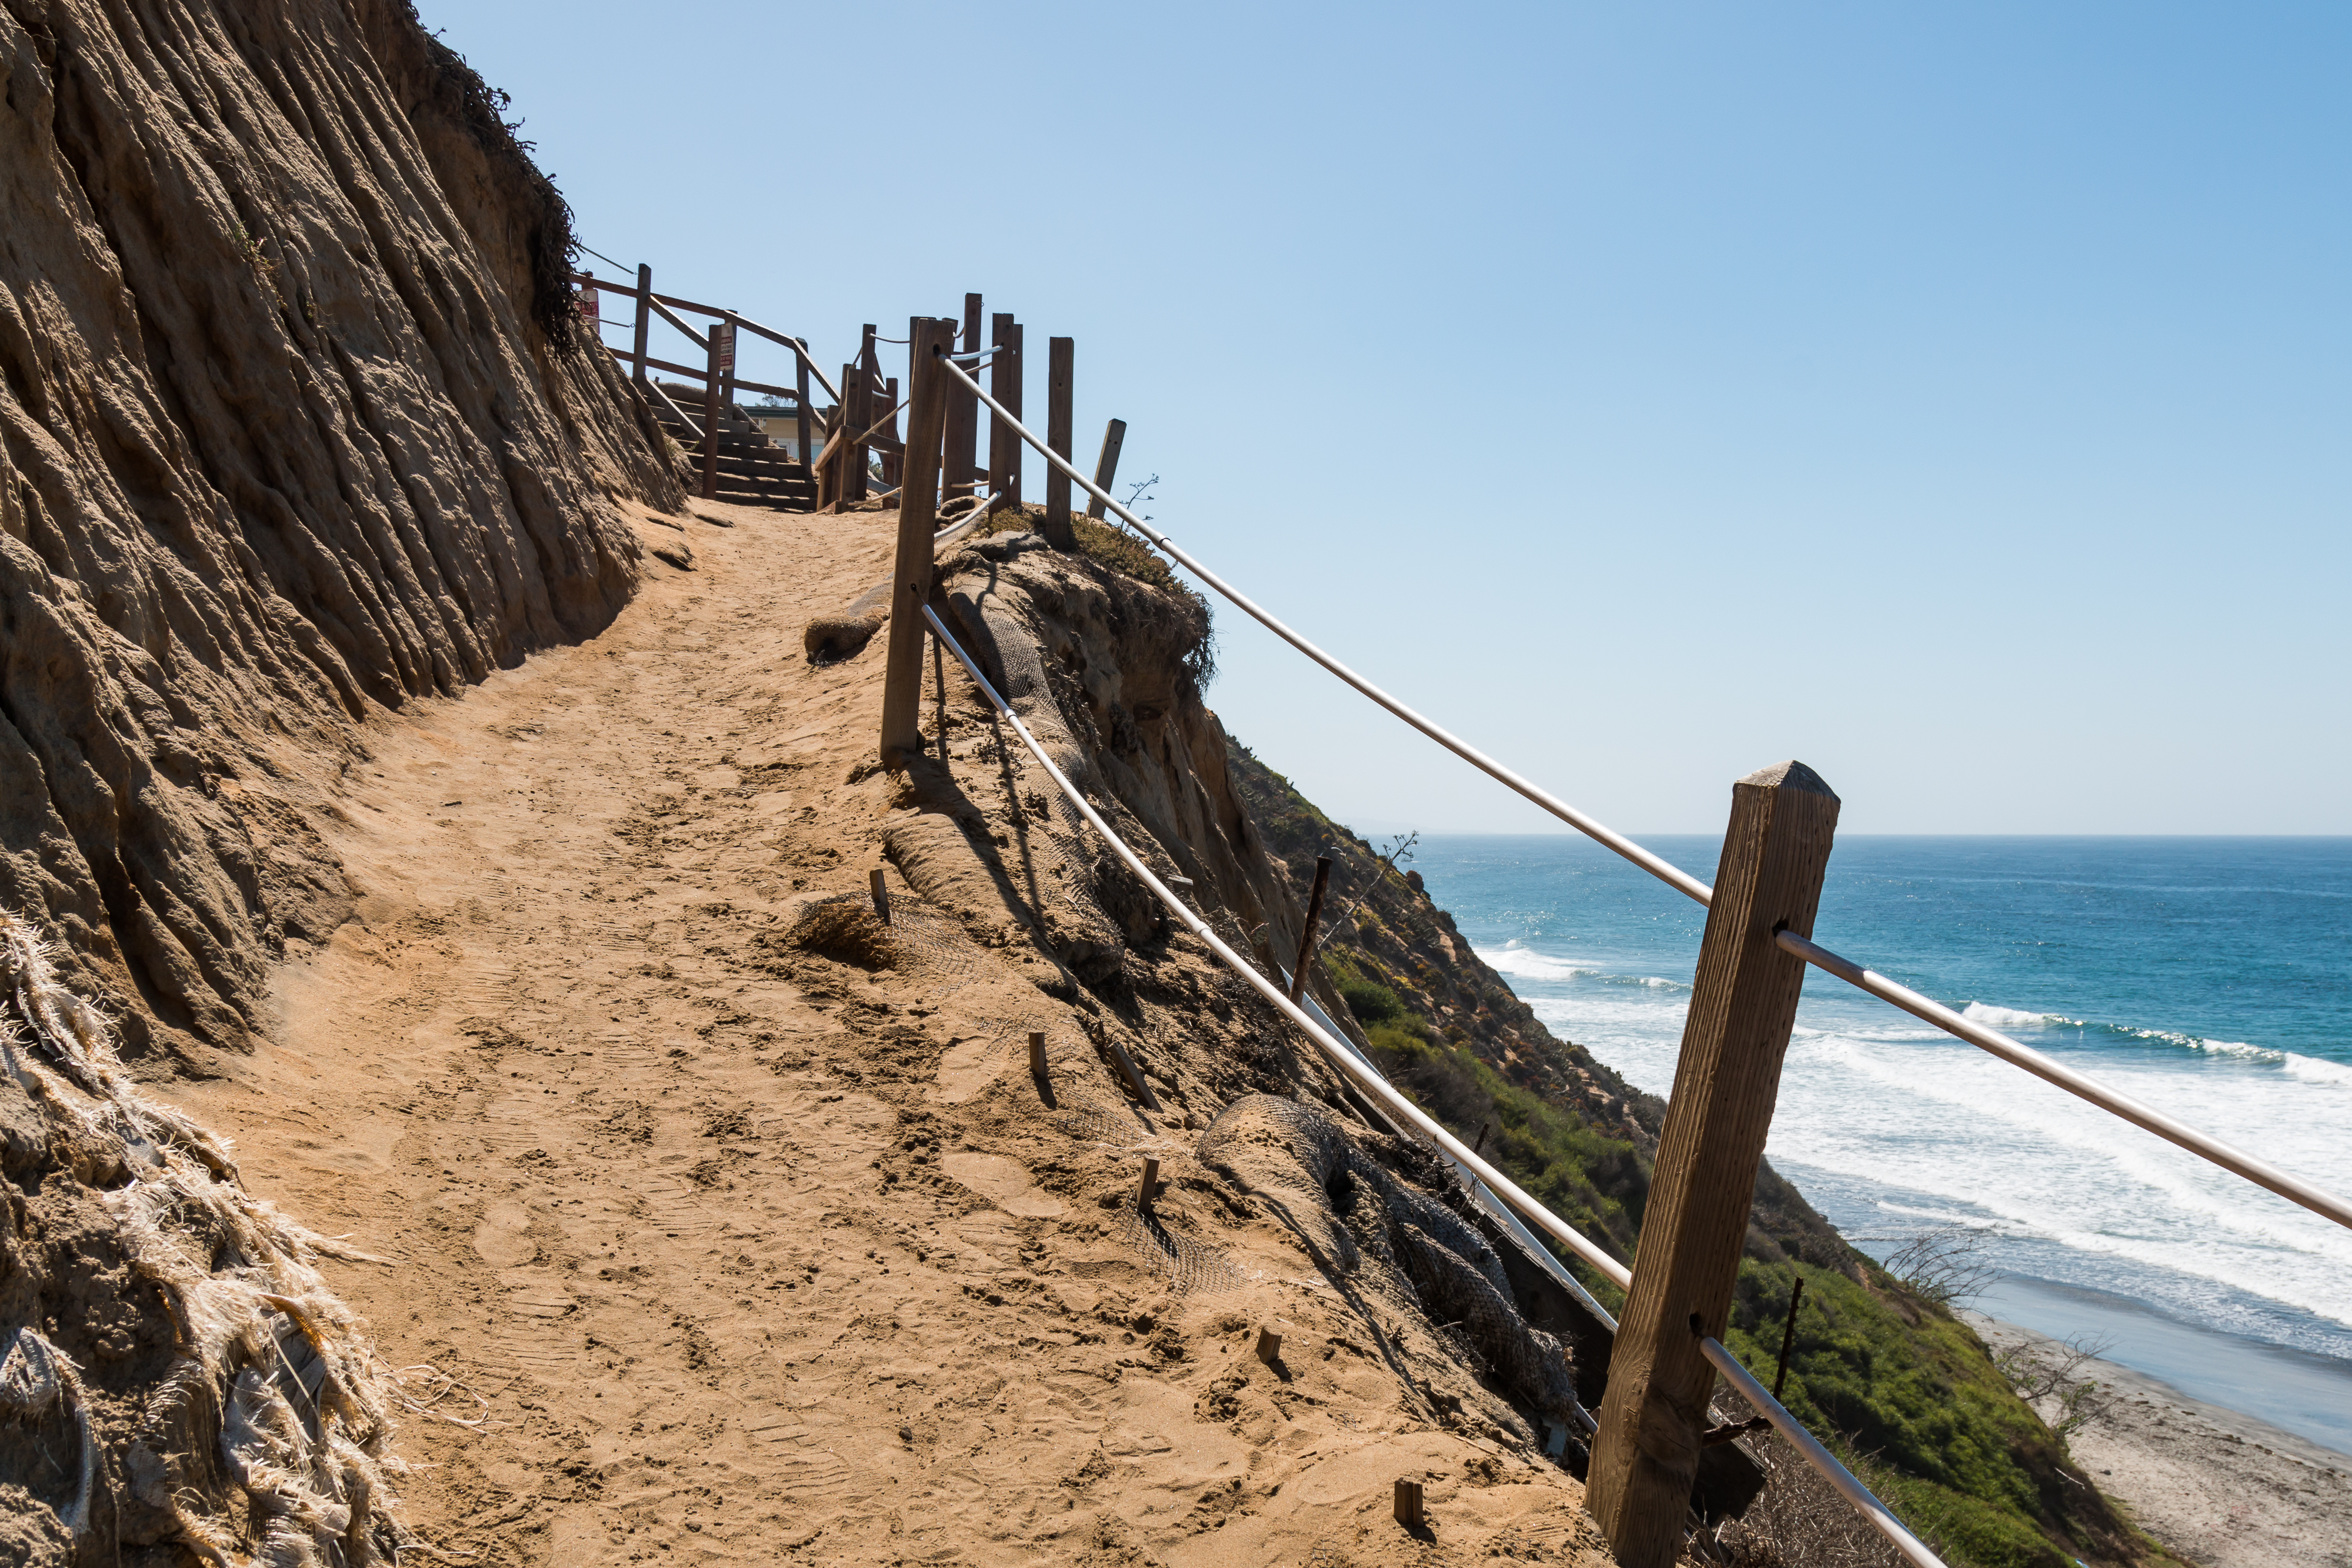 A dirt path on the side of a cliff headed down toward the beach at Beacon's Beach in Encinitas, California.